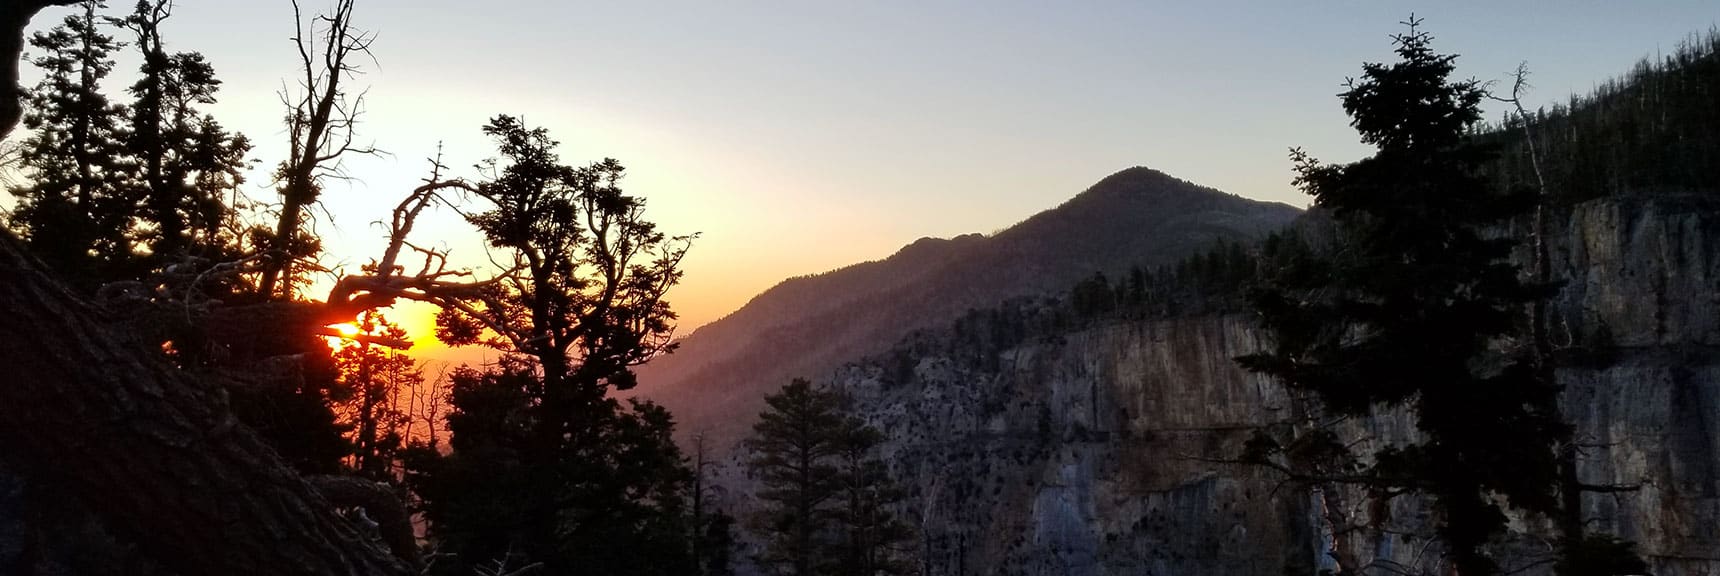 Harris Mountain Sunrise